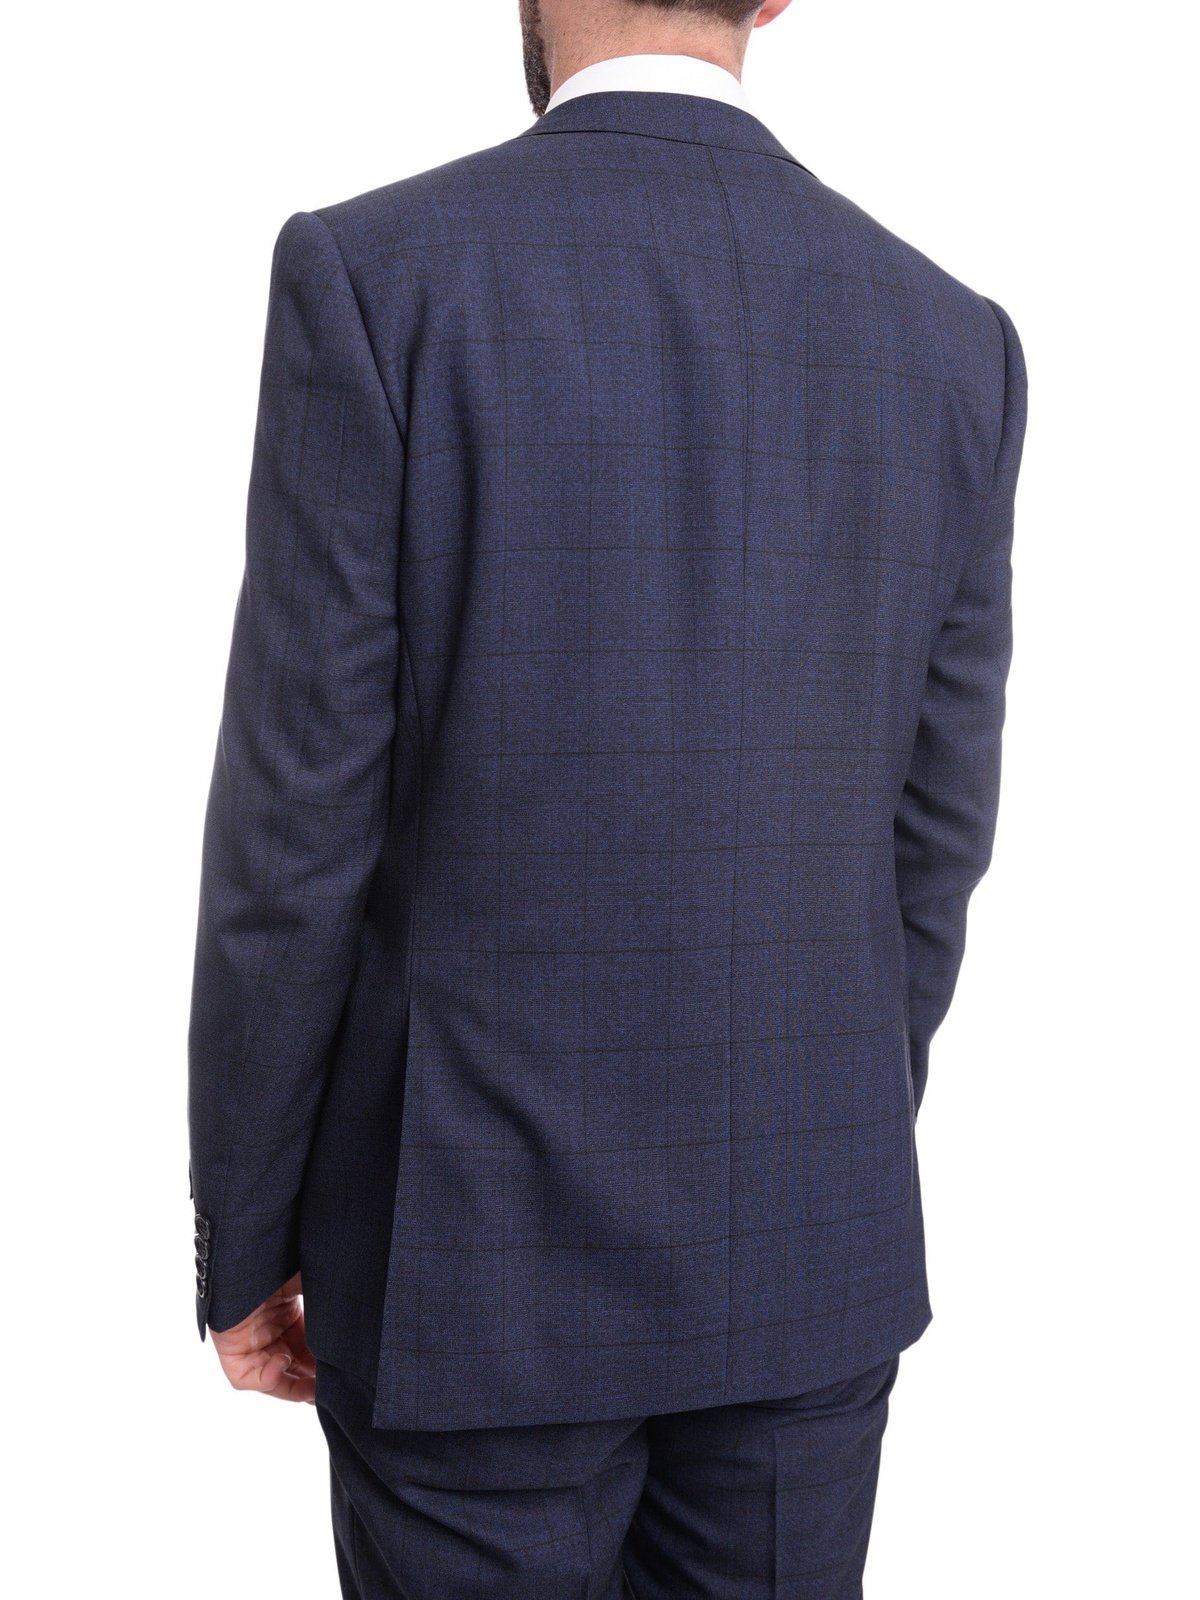 Napoli TWO PIECE SUITS Napoli Slim Fit Textured Blue Black Plaid Half Canvassed Super 160s Wool Suit